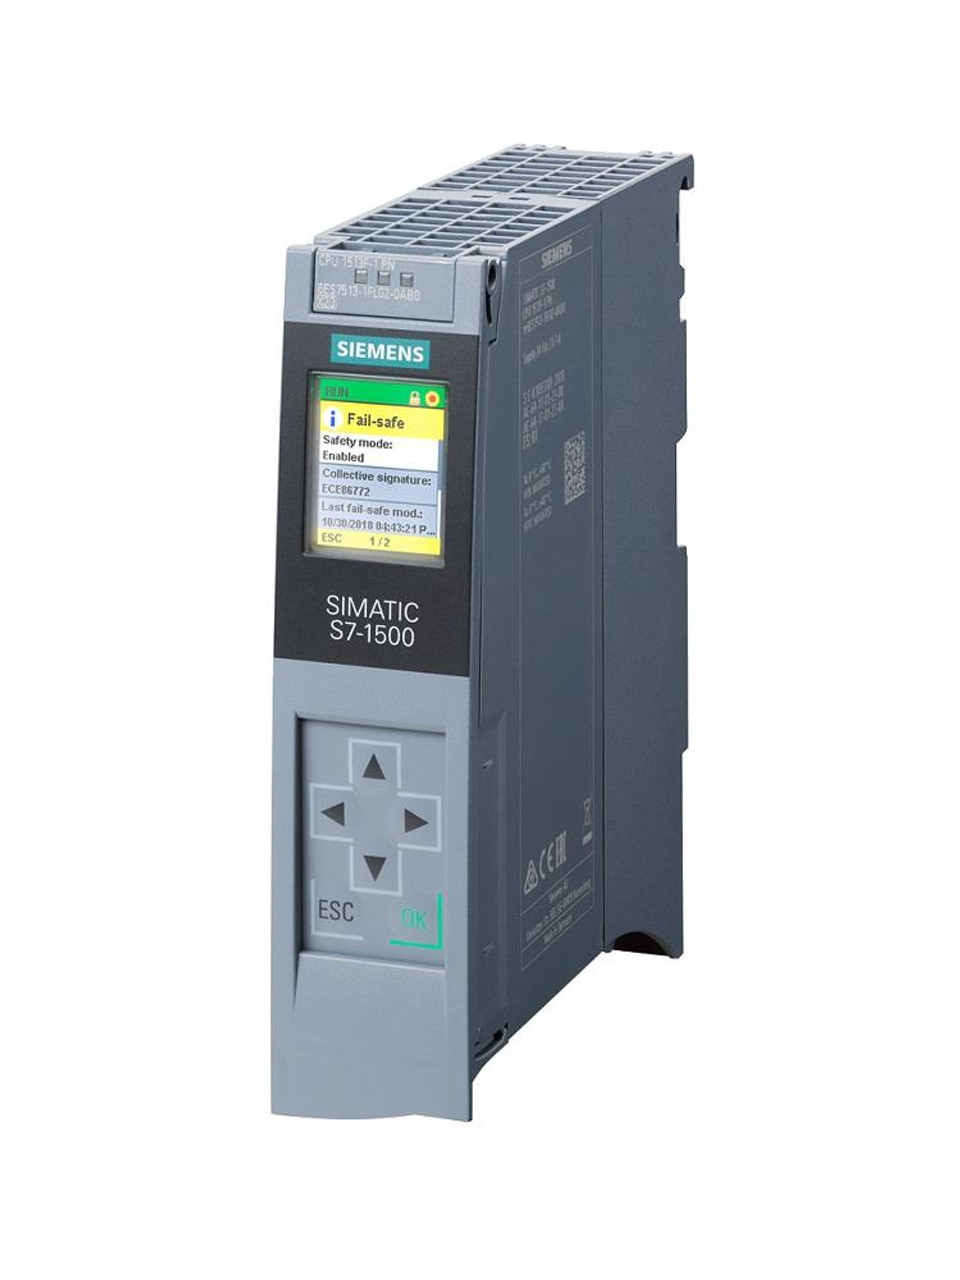 6ES75131FL020AB0 Siemens SIMATIC S7-1500F CPU 1513F-1 PN 450 kB / 1.5 MB 1xPN Interface with 2 Port Switch